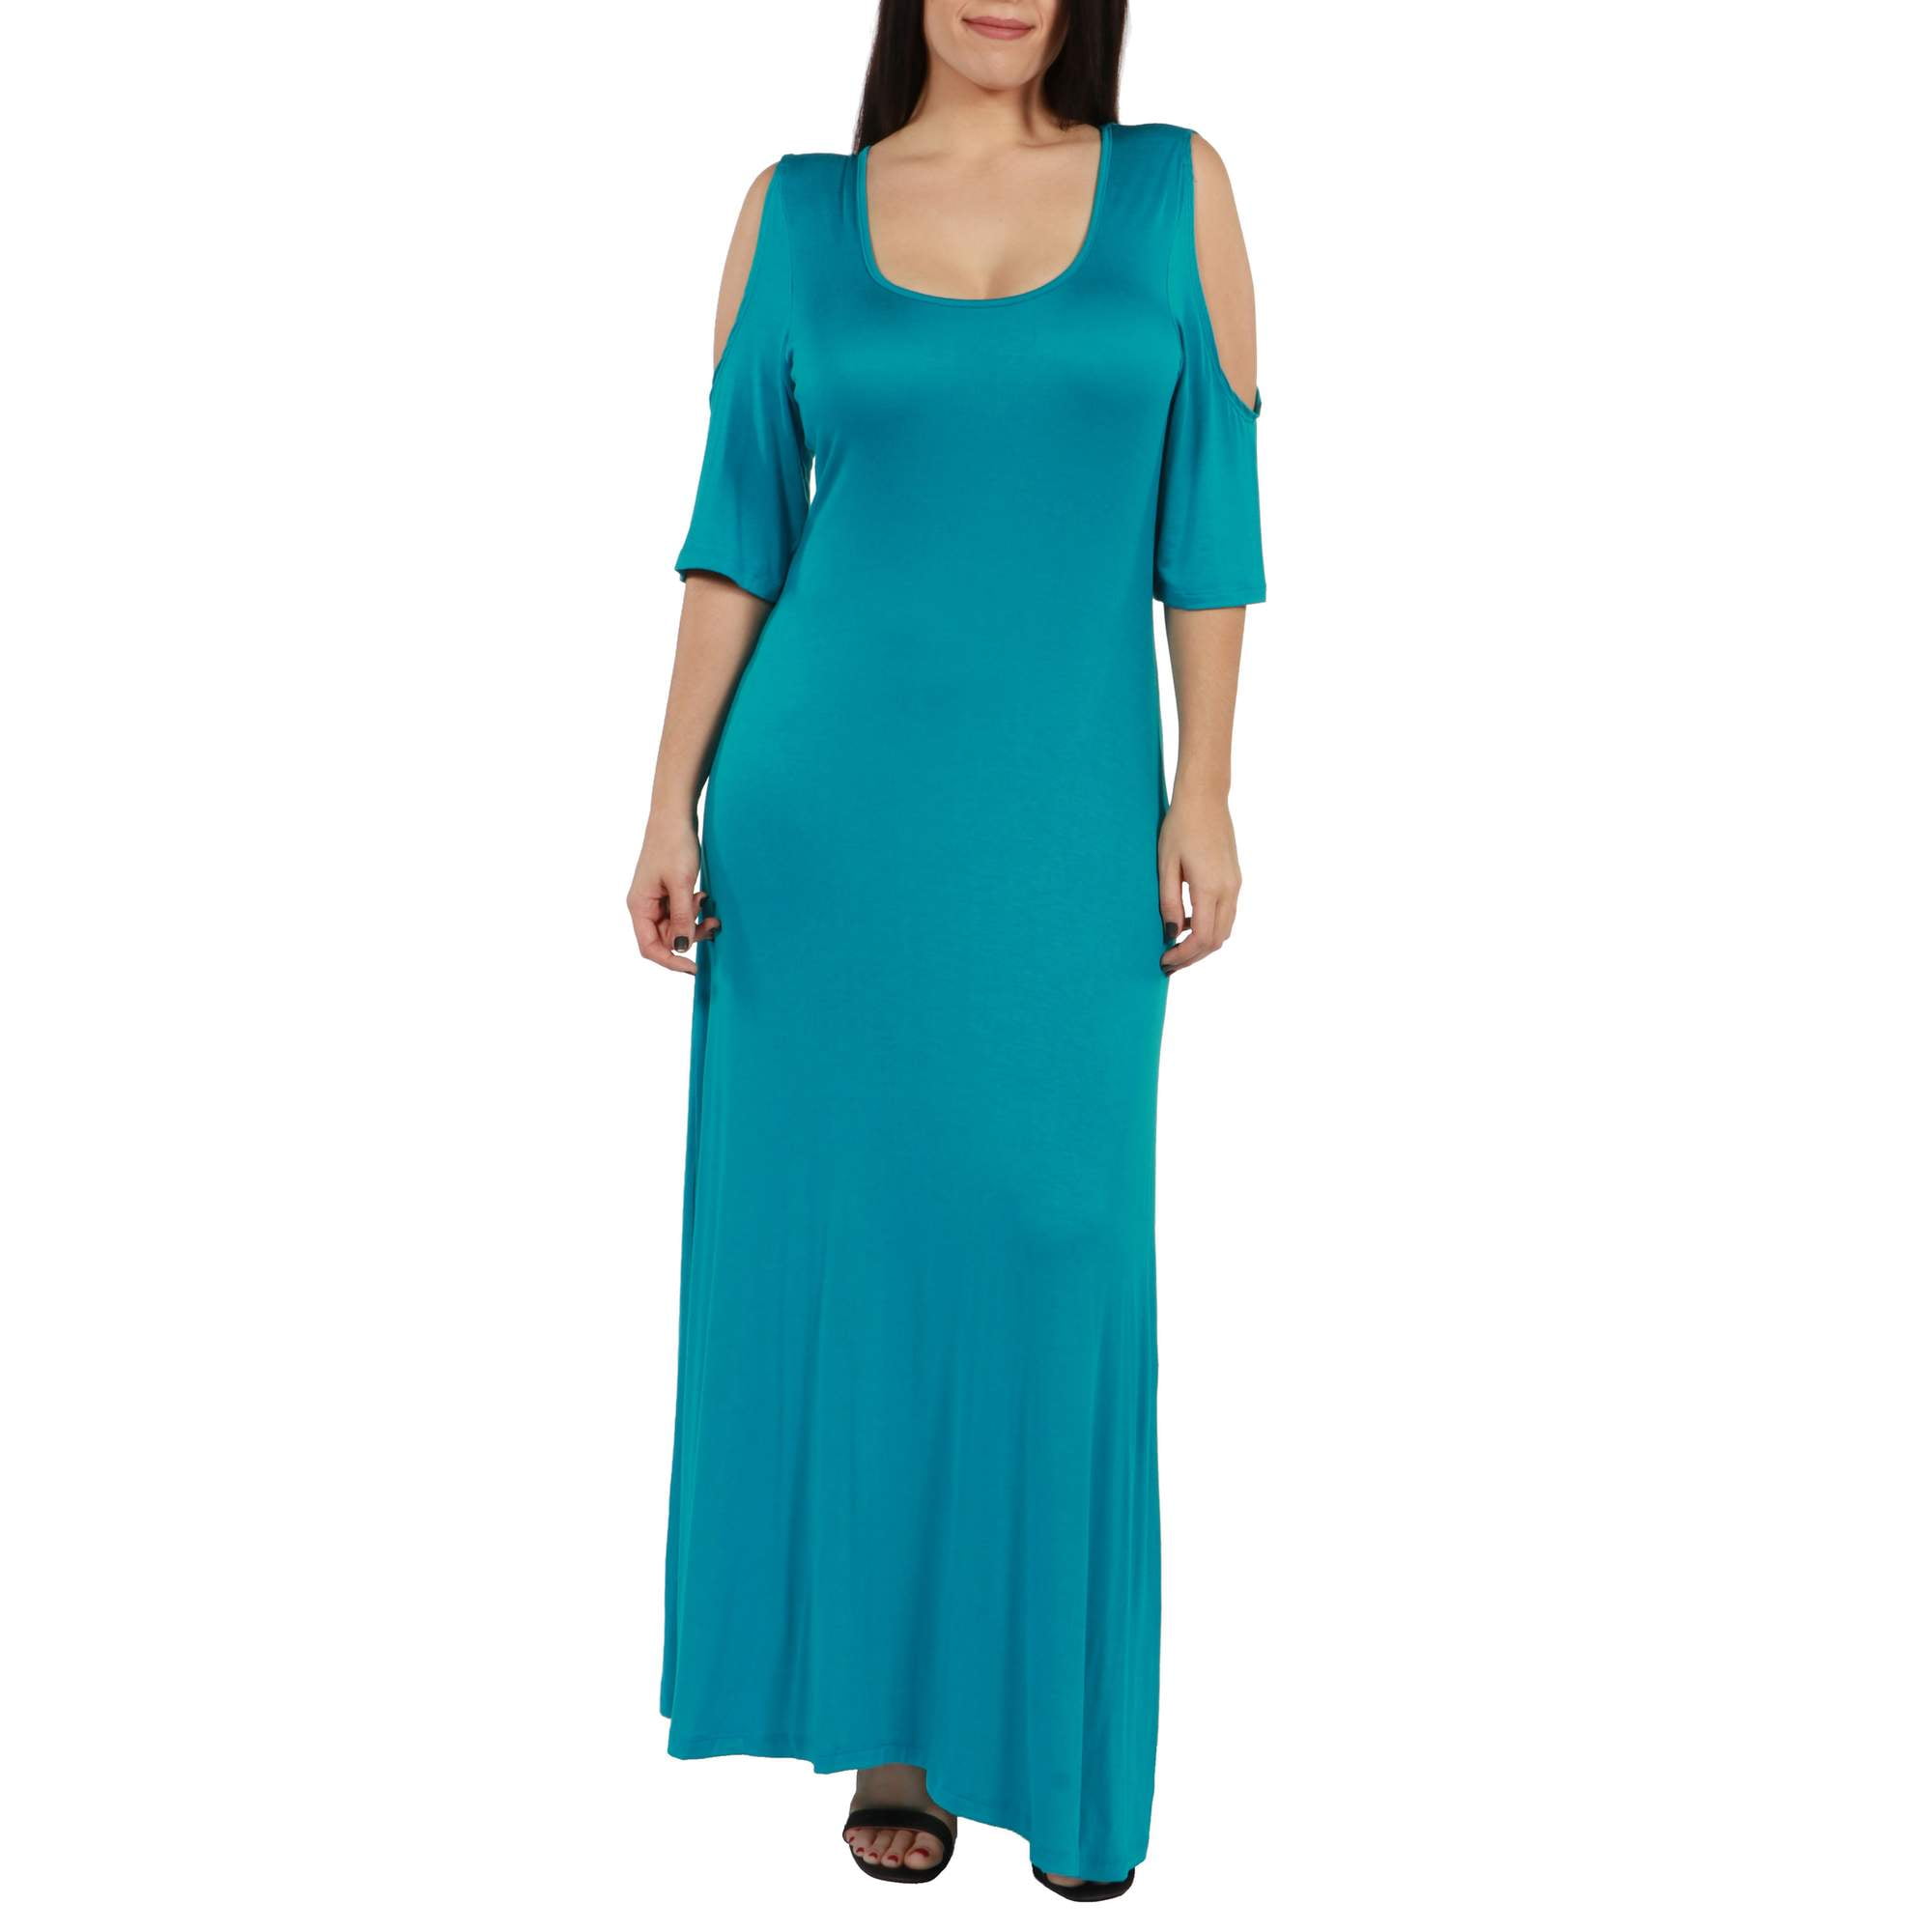 Meg Plus Size Maxi Dress - Walmart.com